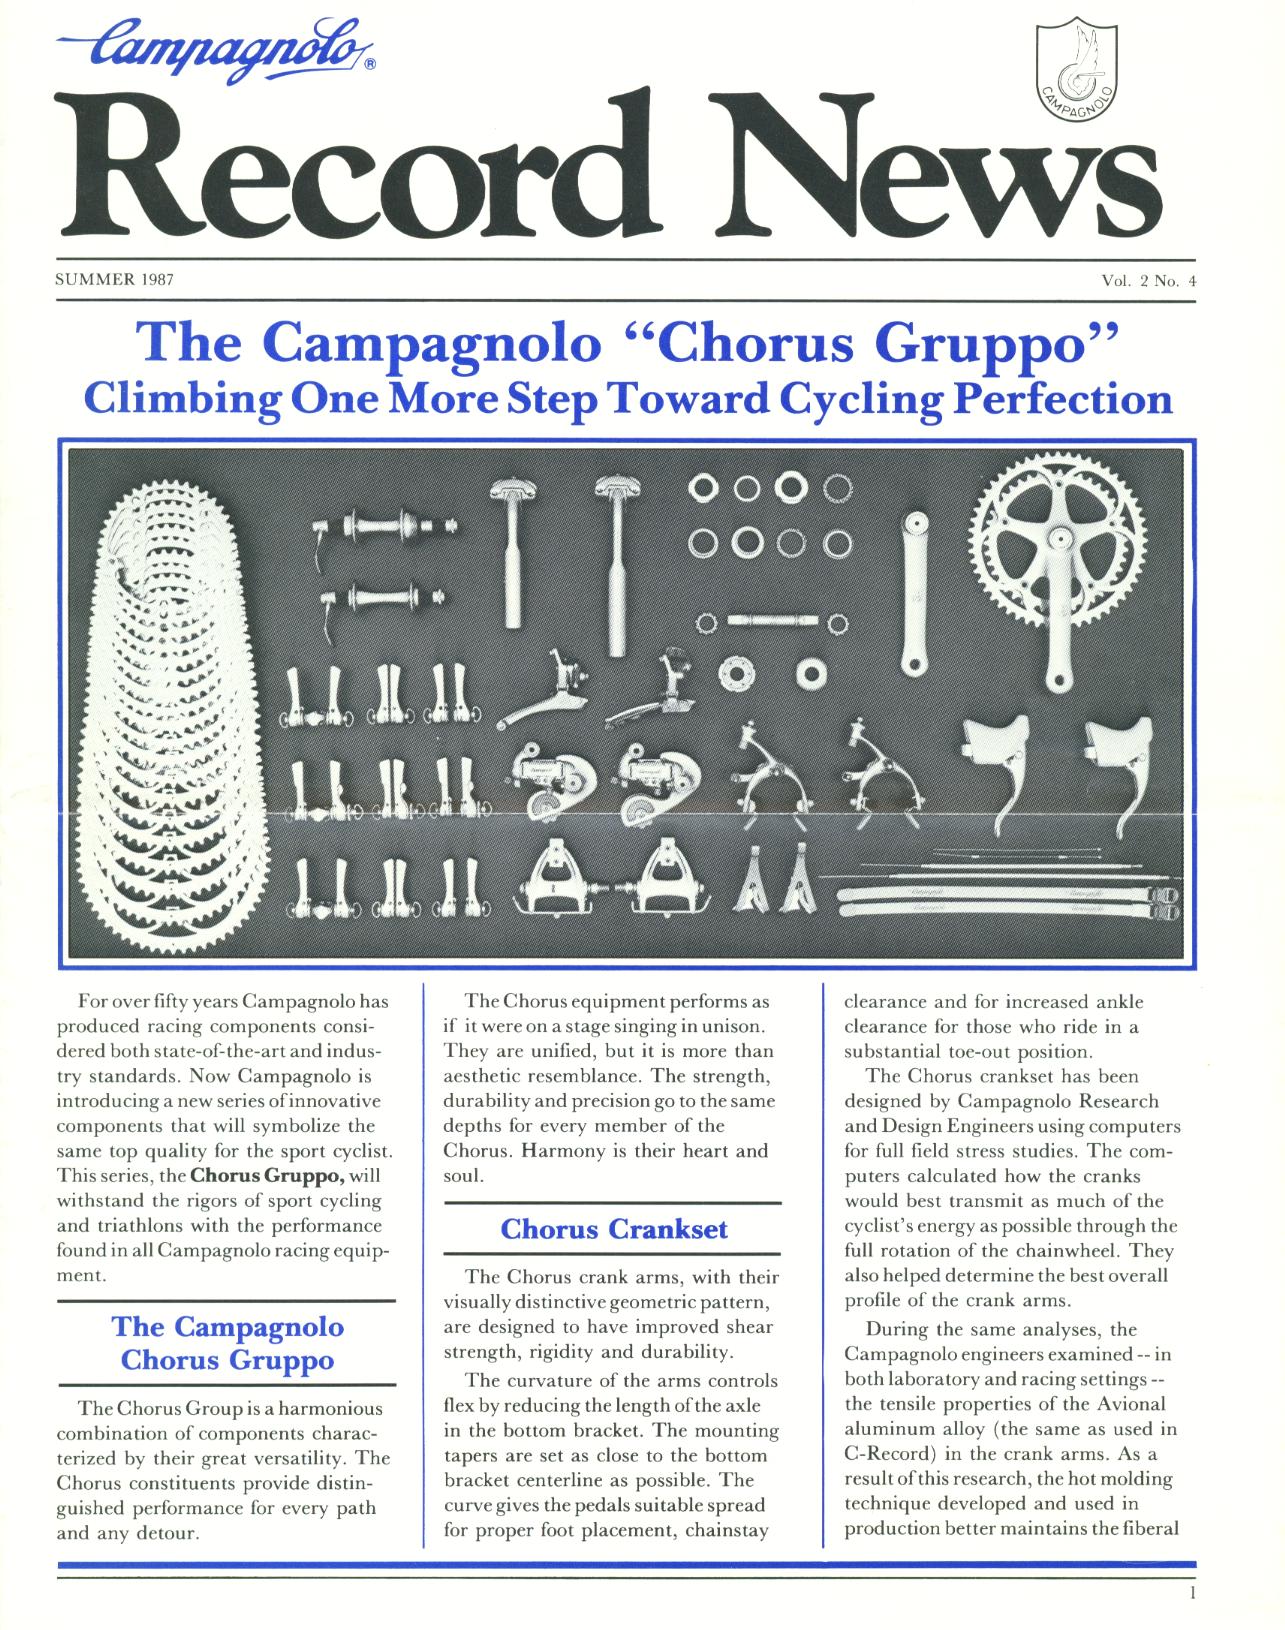 record_news_1987.jpg